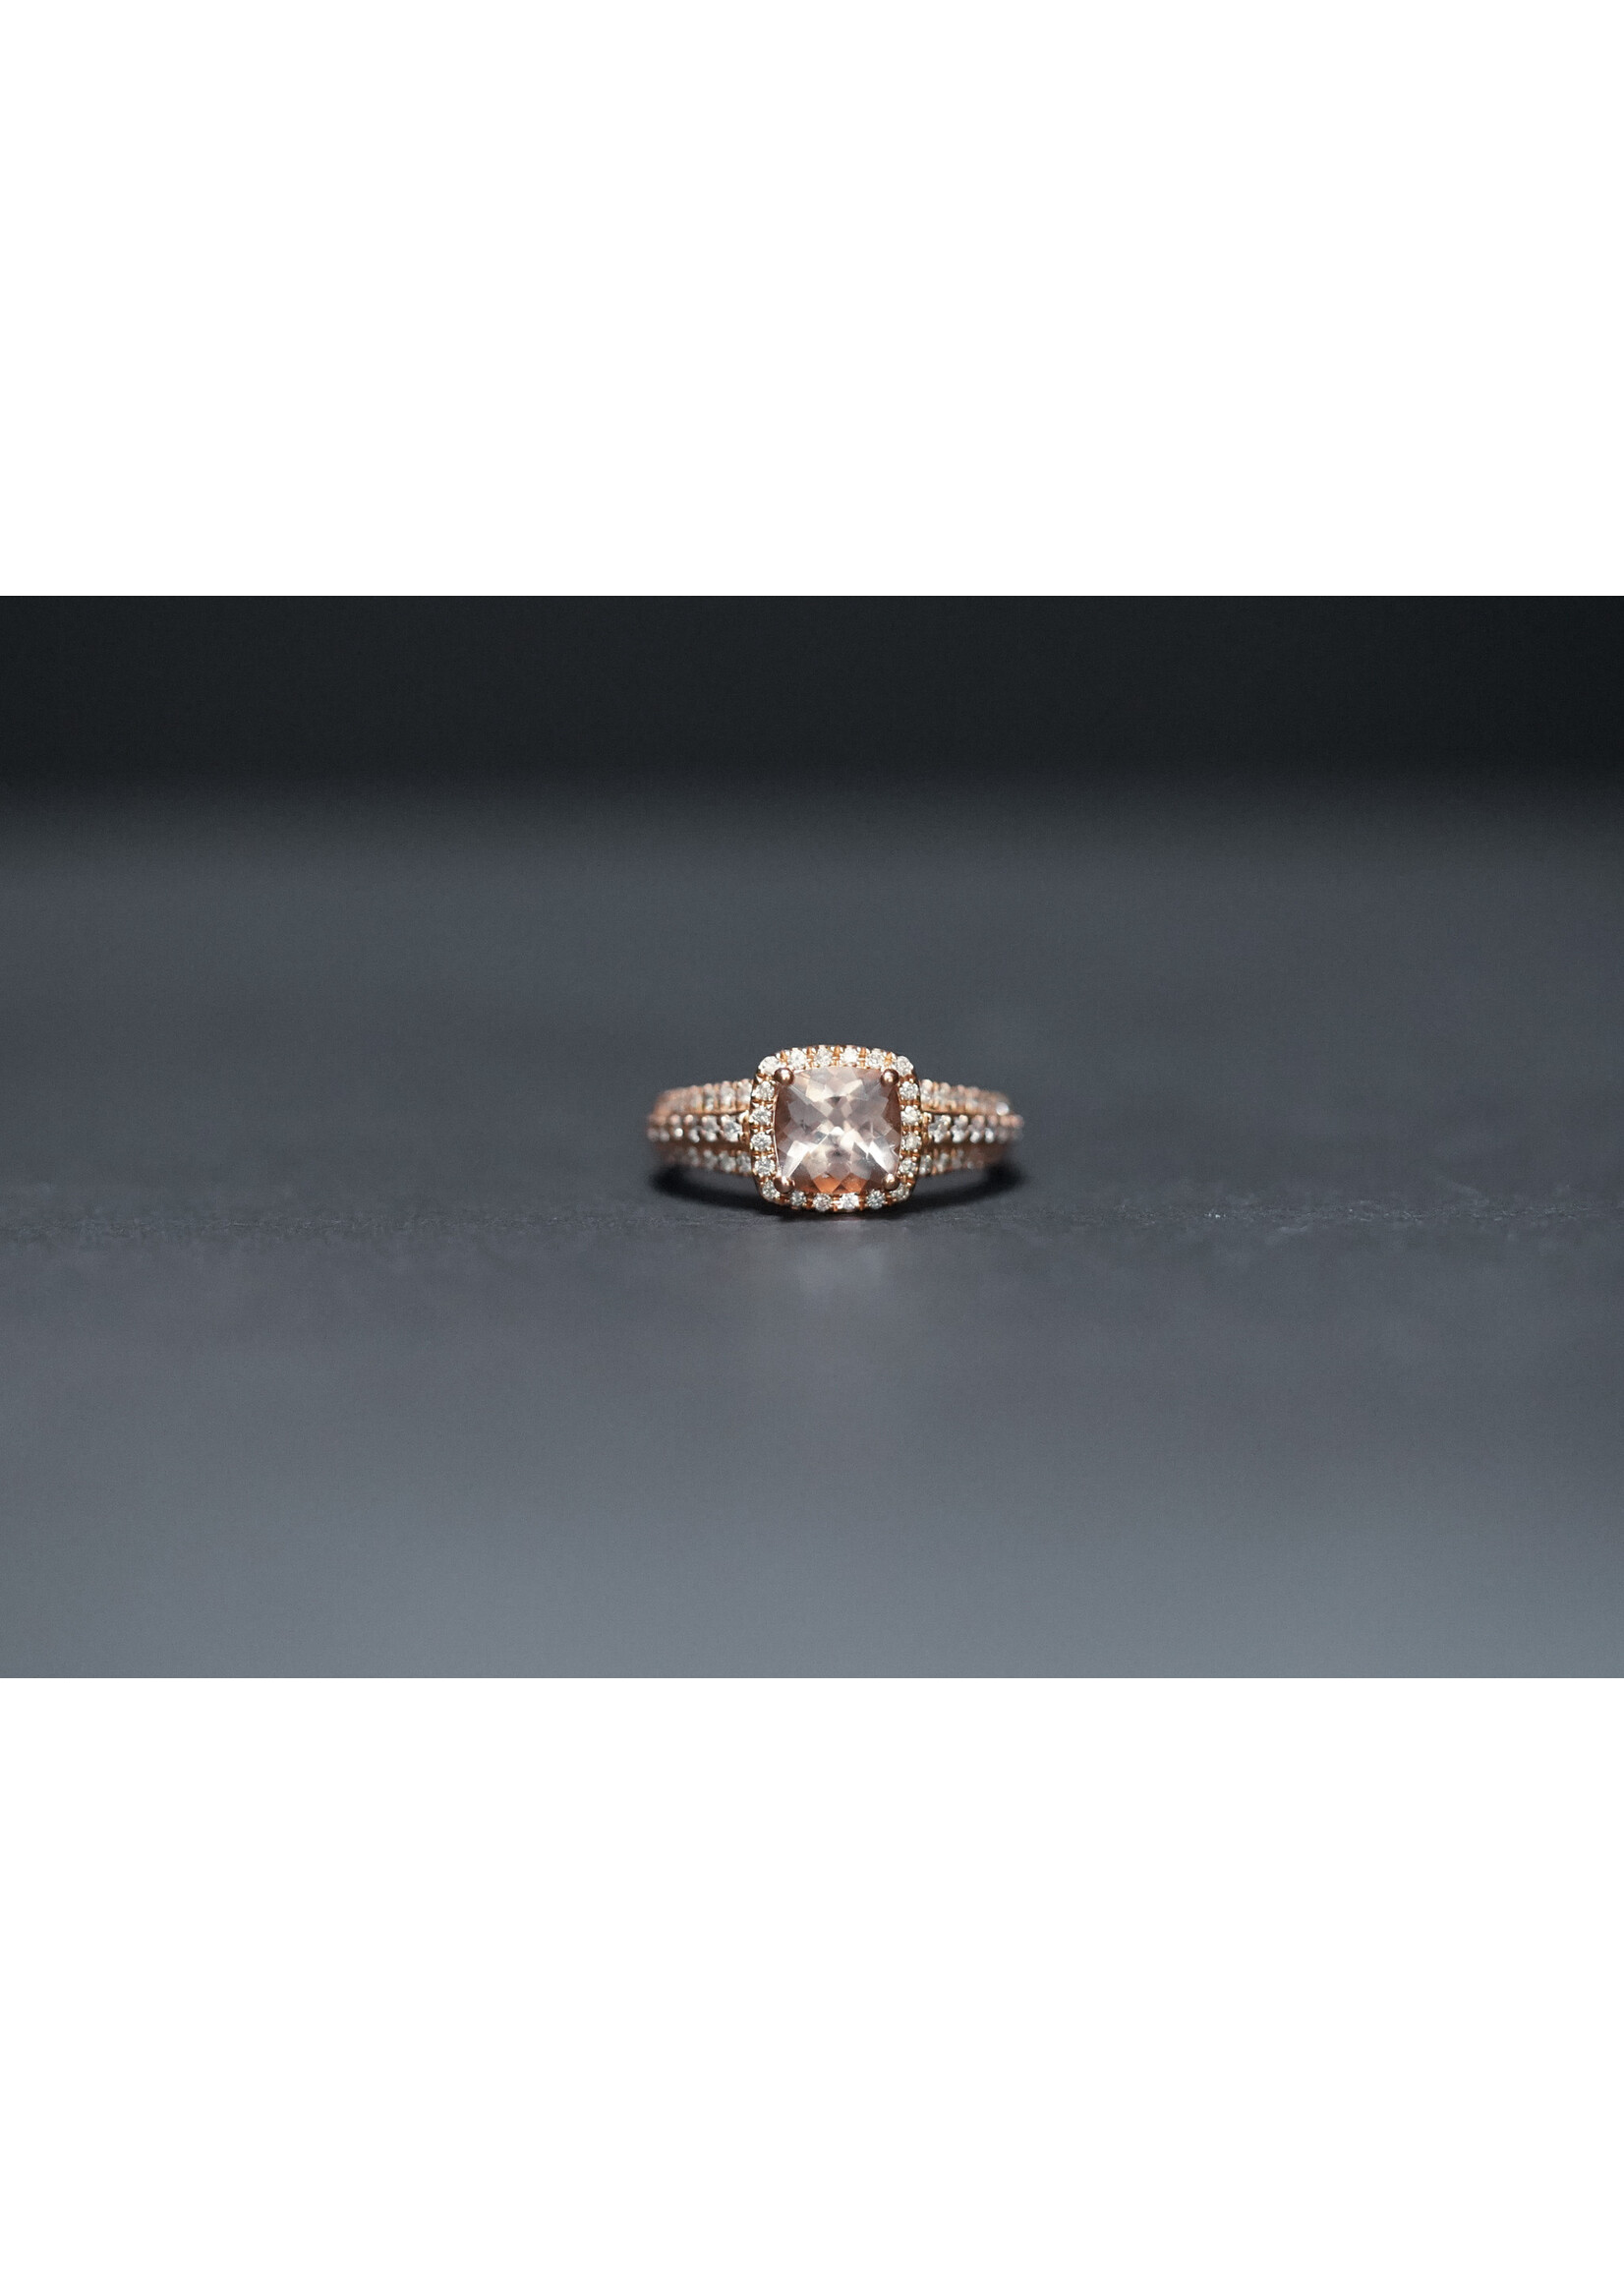 14KR 4.56g 2.00ctw (1.40ctr) Morganite & Diamond Halo Fashion Ring (size 6)